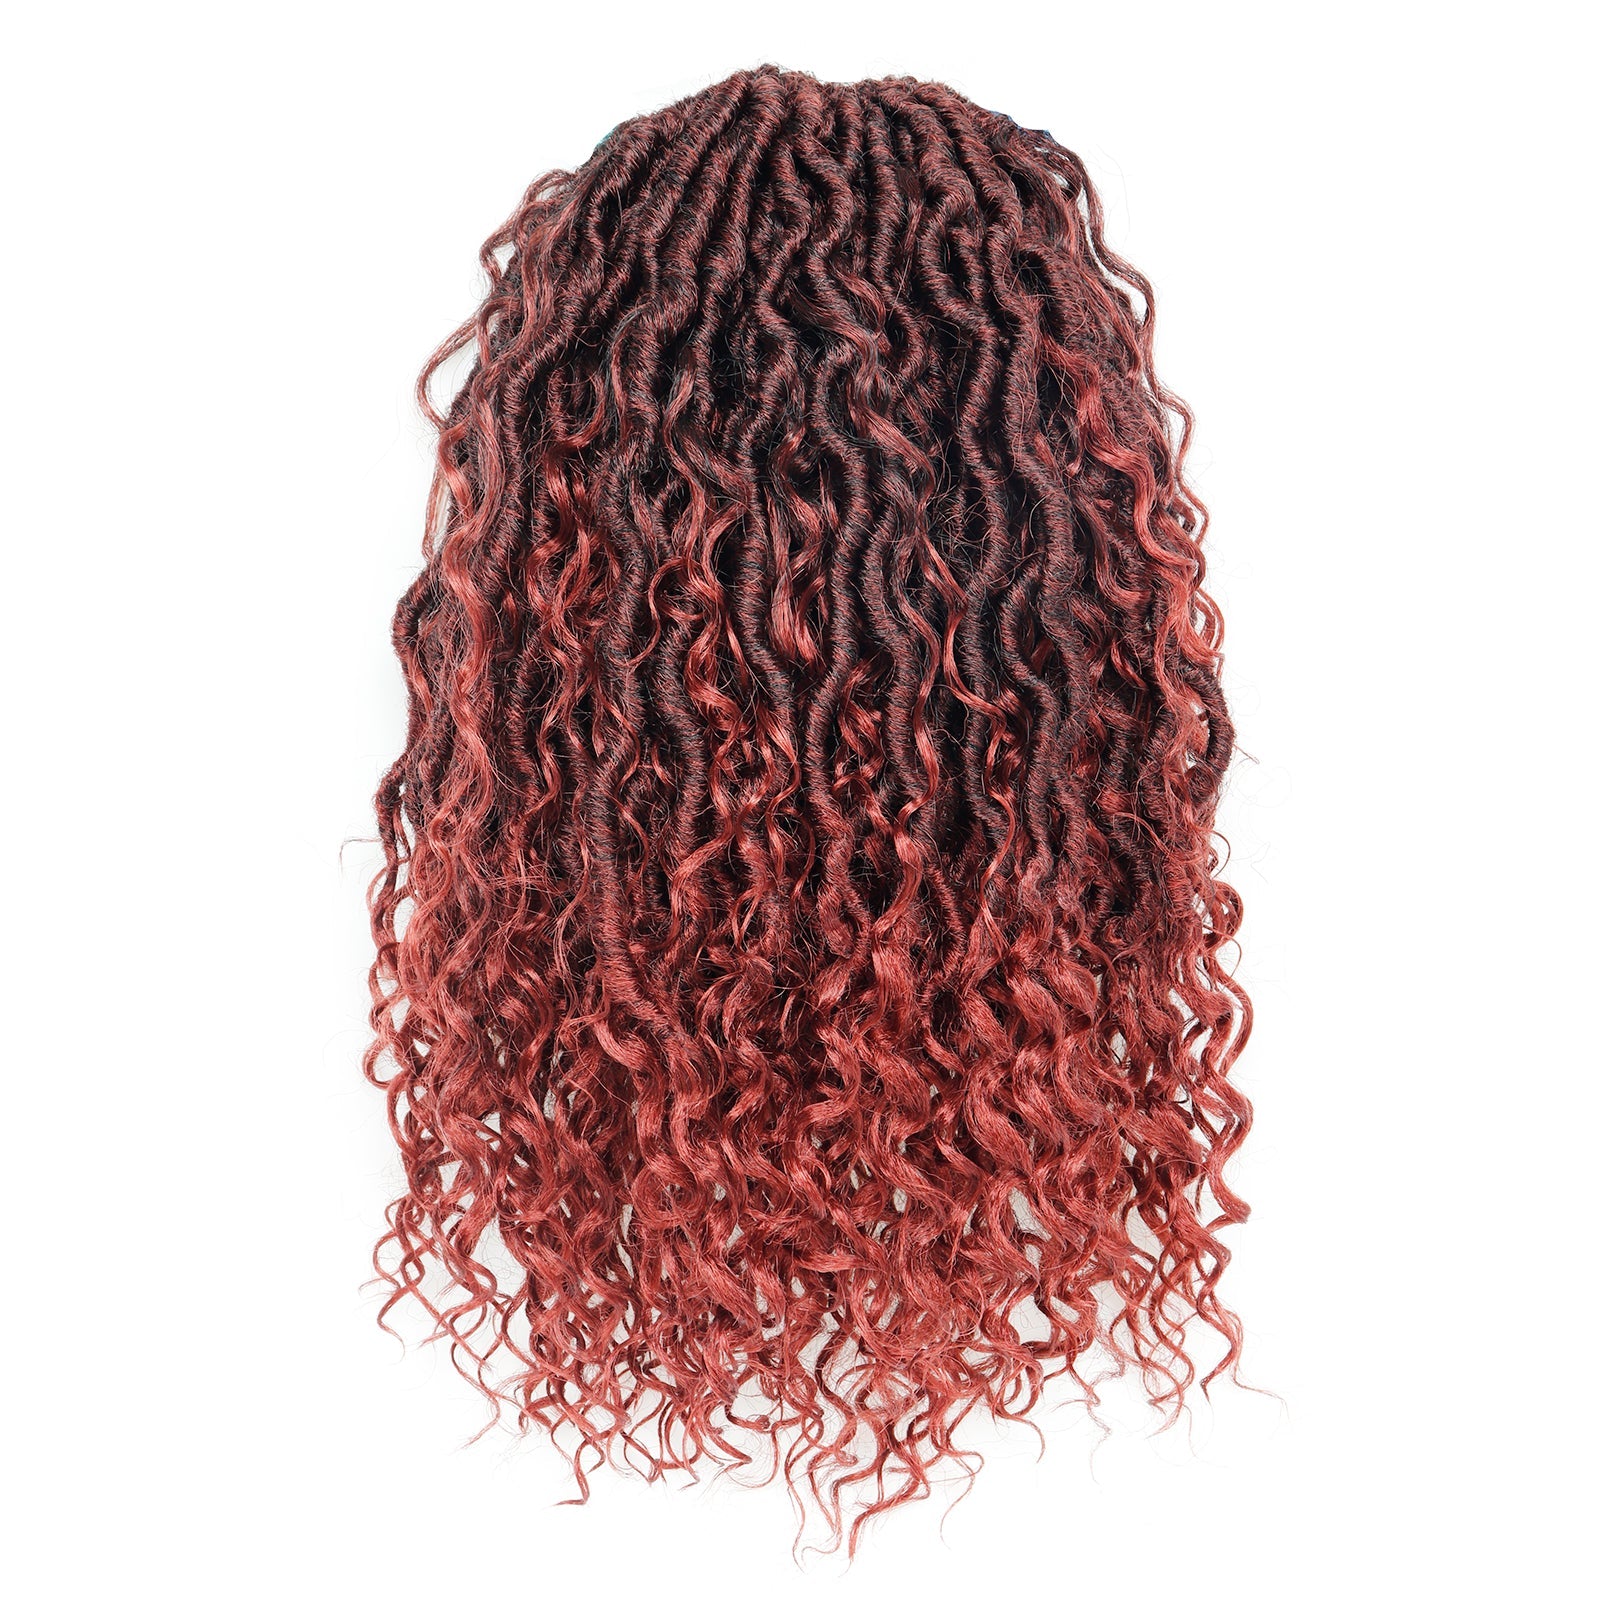 Toceana Goddess Locs Crochet Hair Faux Locs Crochet Braids Curly Ends Synthetic Braiding Hair Extensions